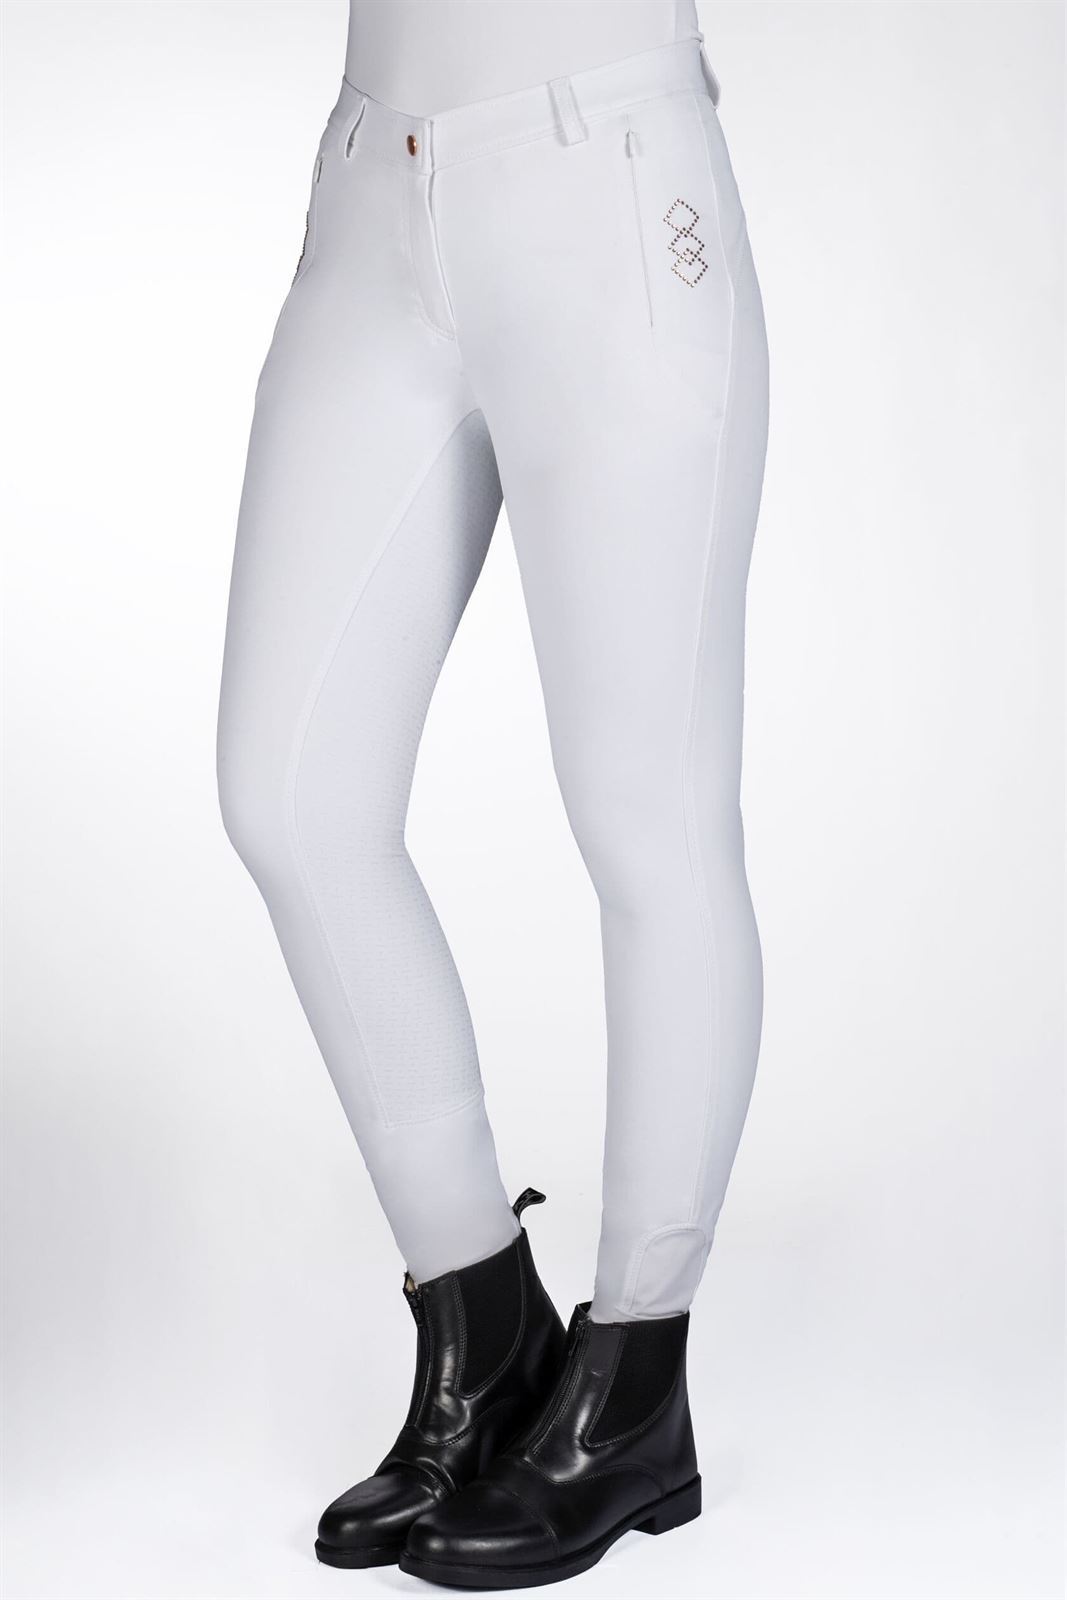 Pantalón mujer HKM Sports Equipment Alexis culera de grip, color blanco - Imagen 2